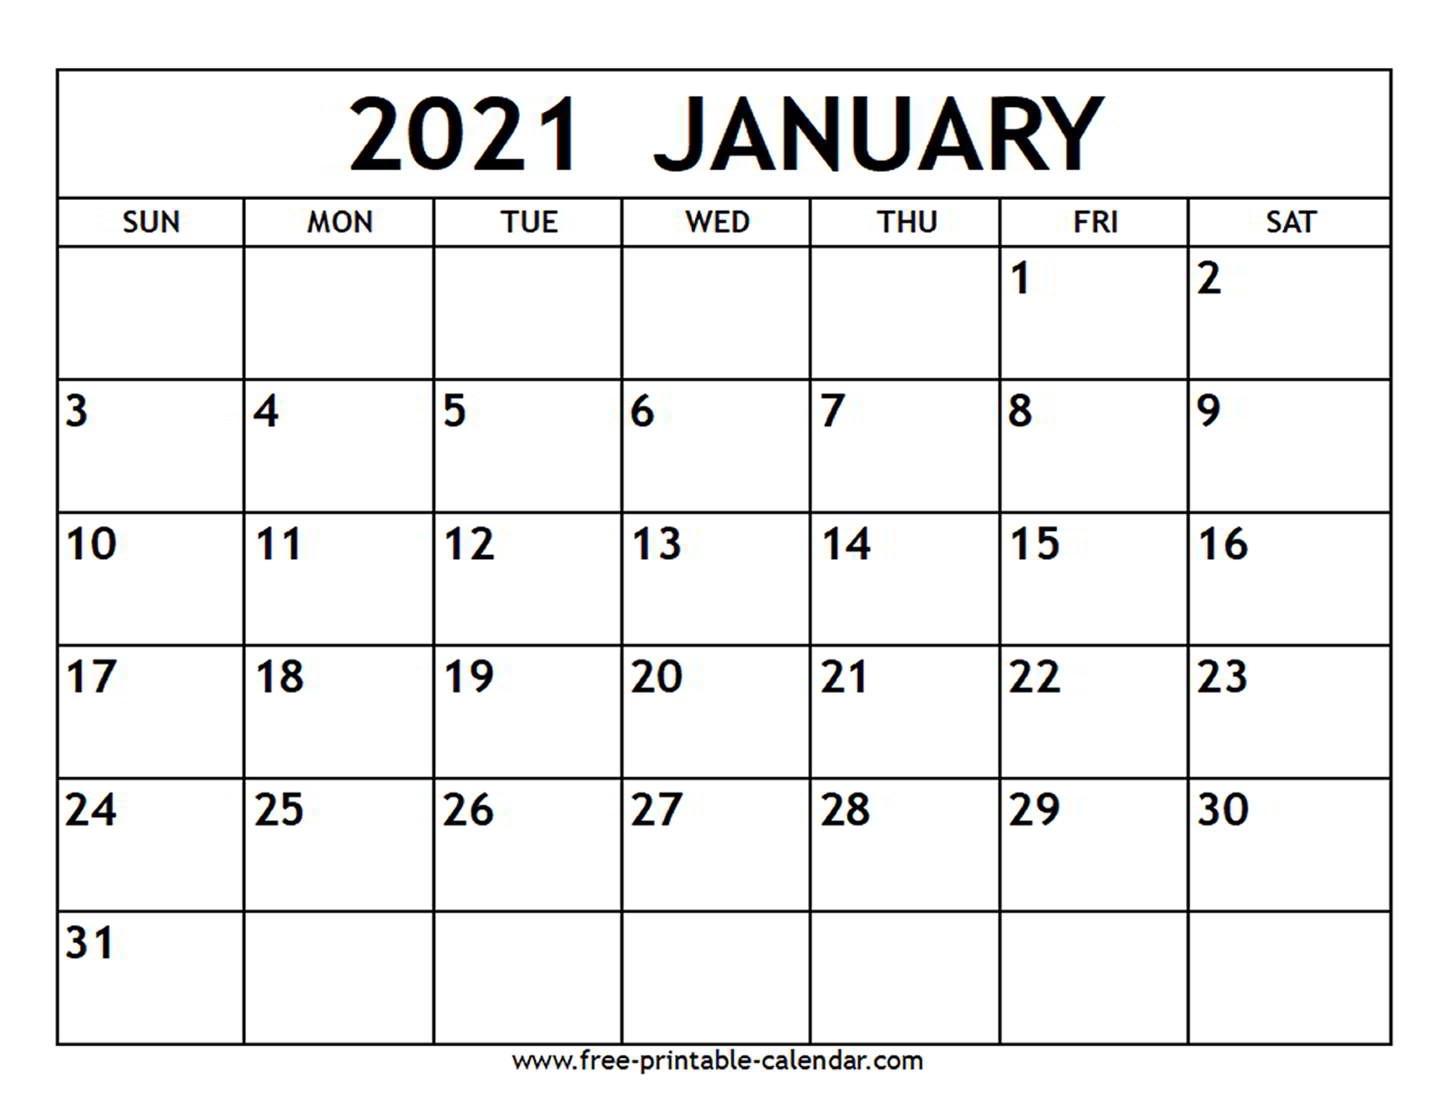 January 2021 Calendar - Free-Printable-Calendar-2021 Calendar Template Fill In